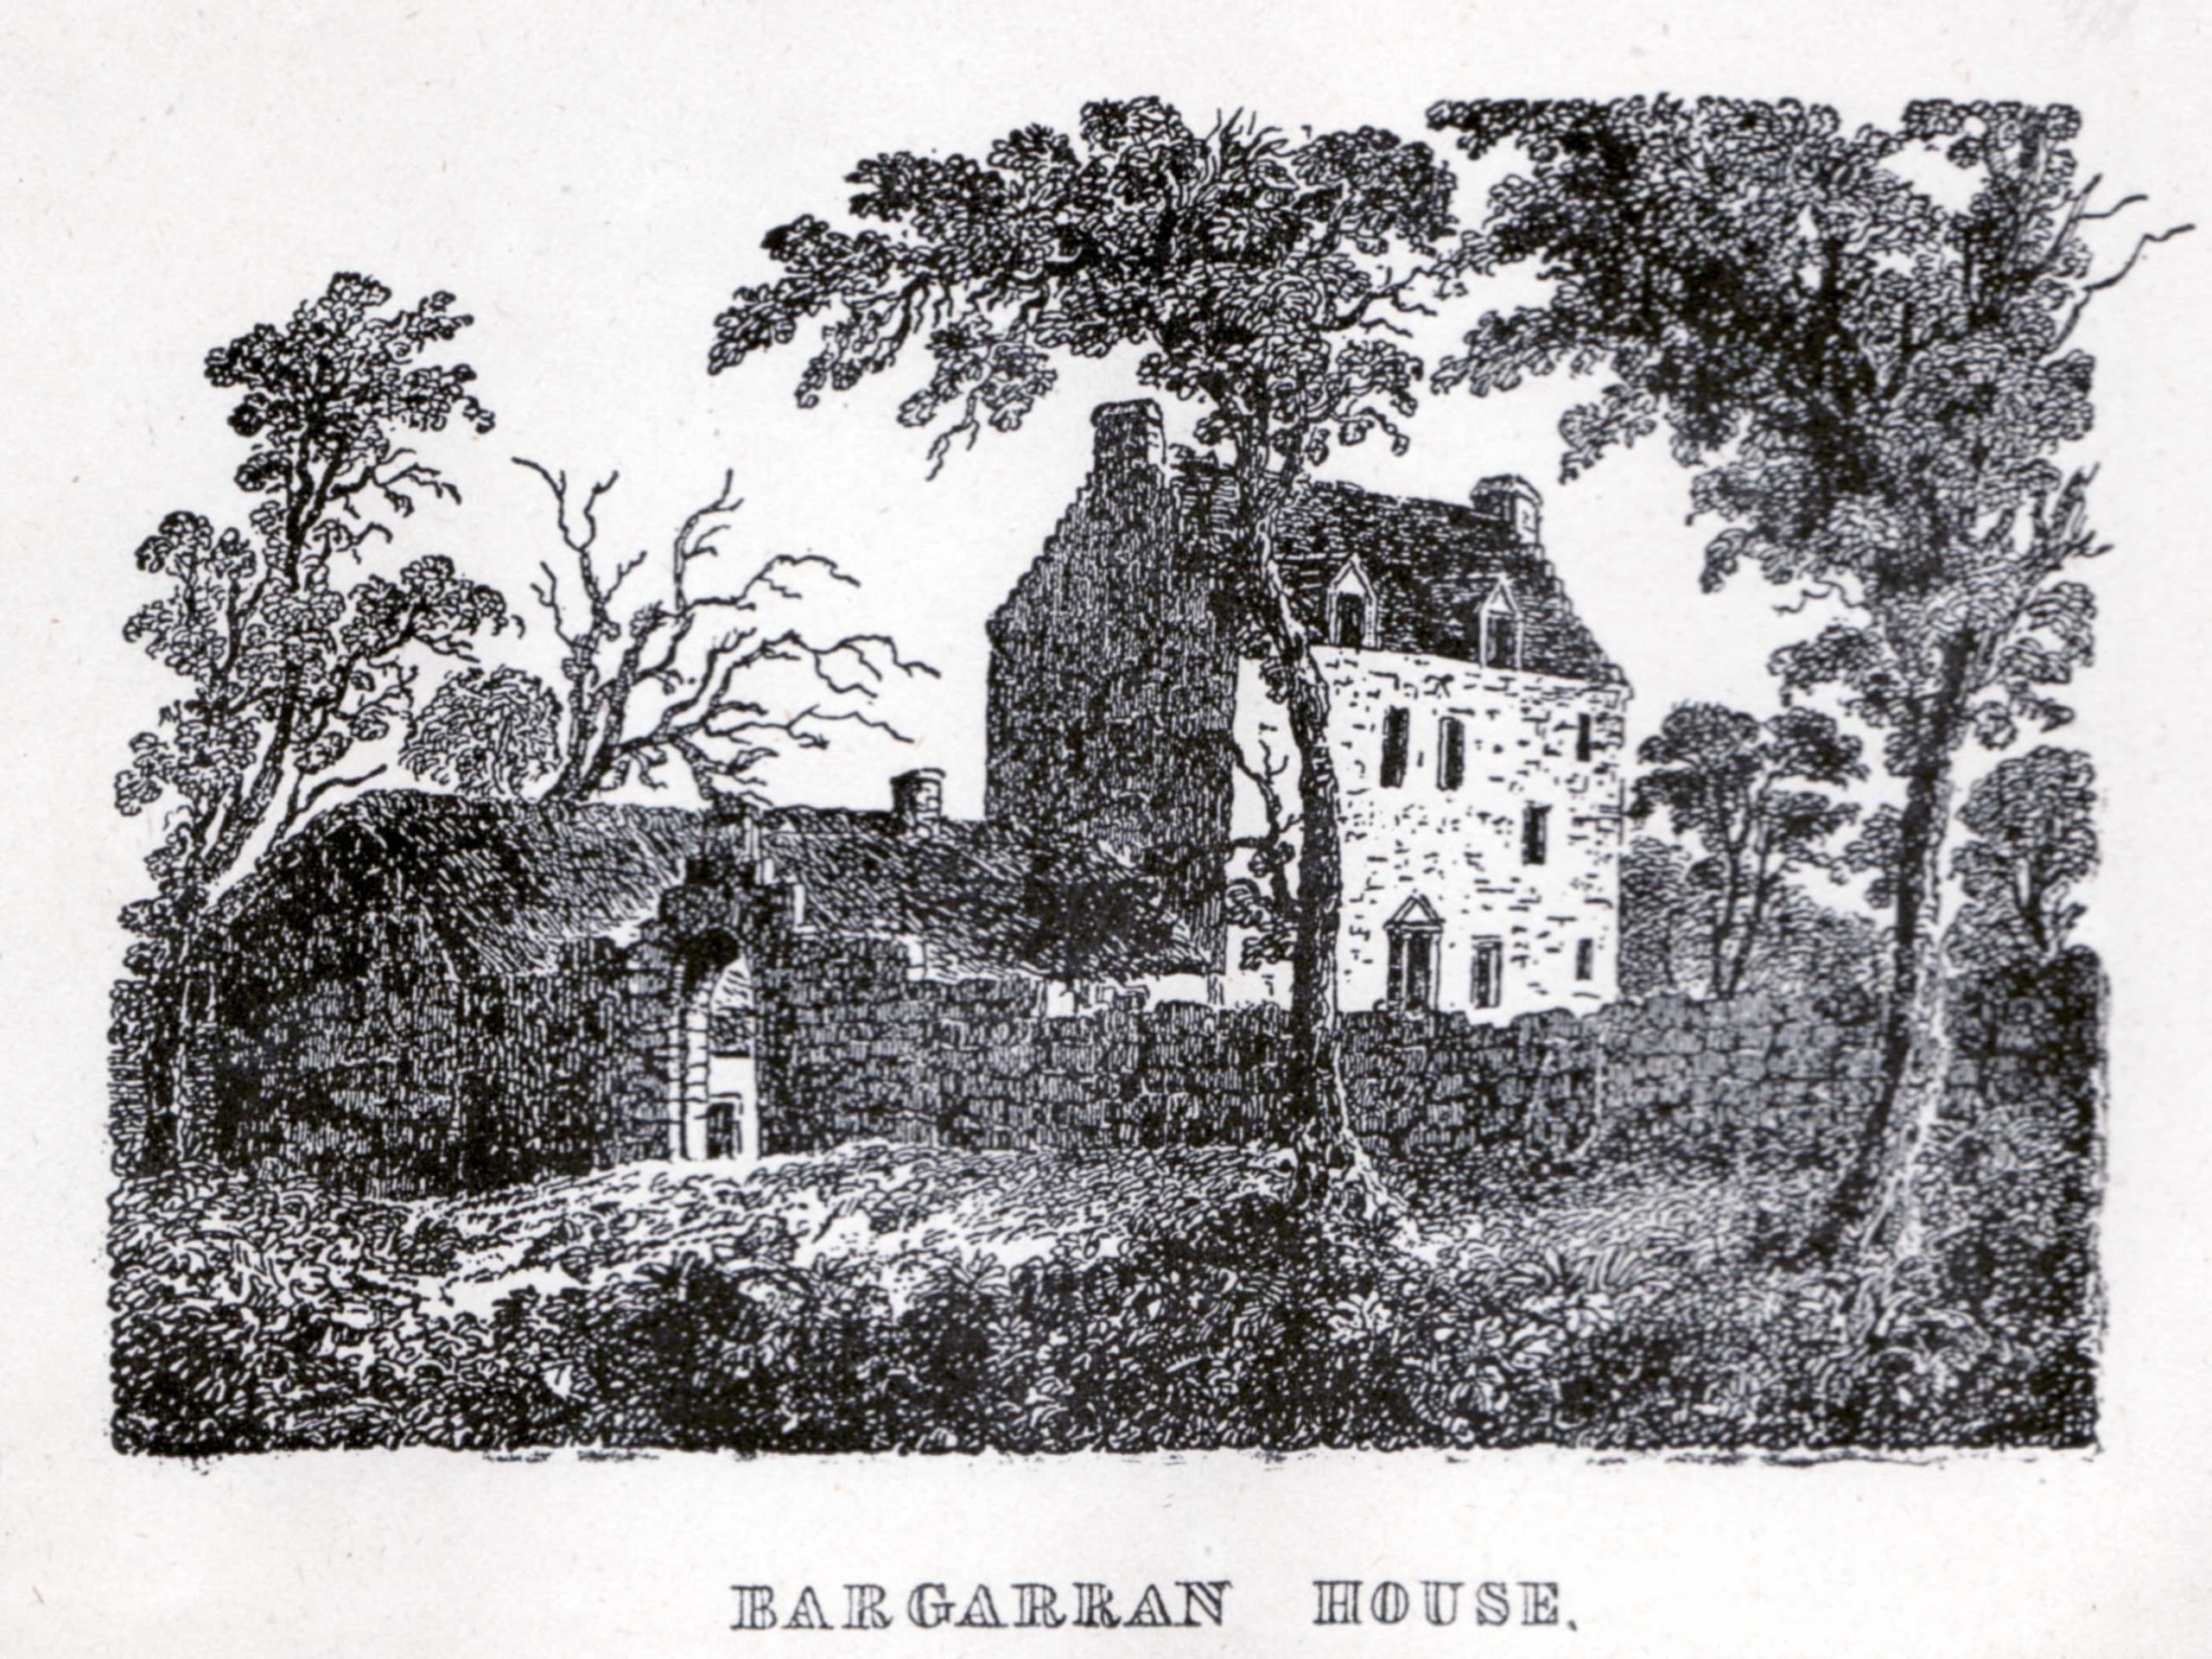 Dark Events at Bargarran in 1676